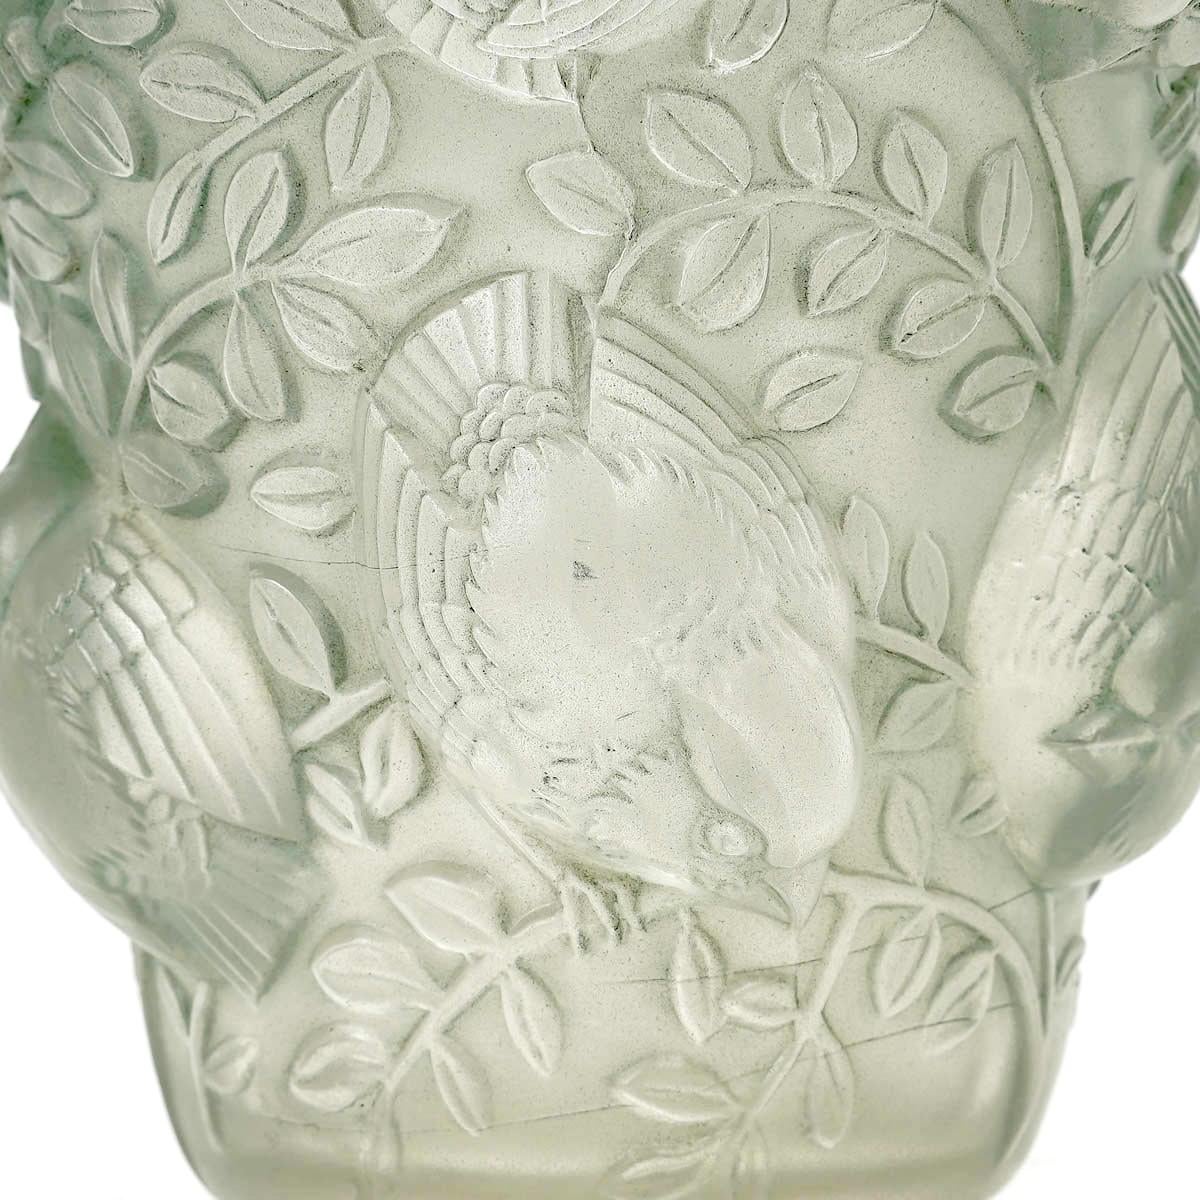 Molded 1930 René Lalique Vase Saint-François Frosted Glass Green Patina, Birds For Sale